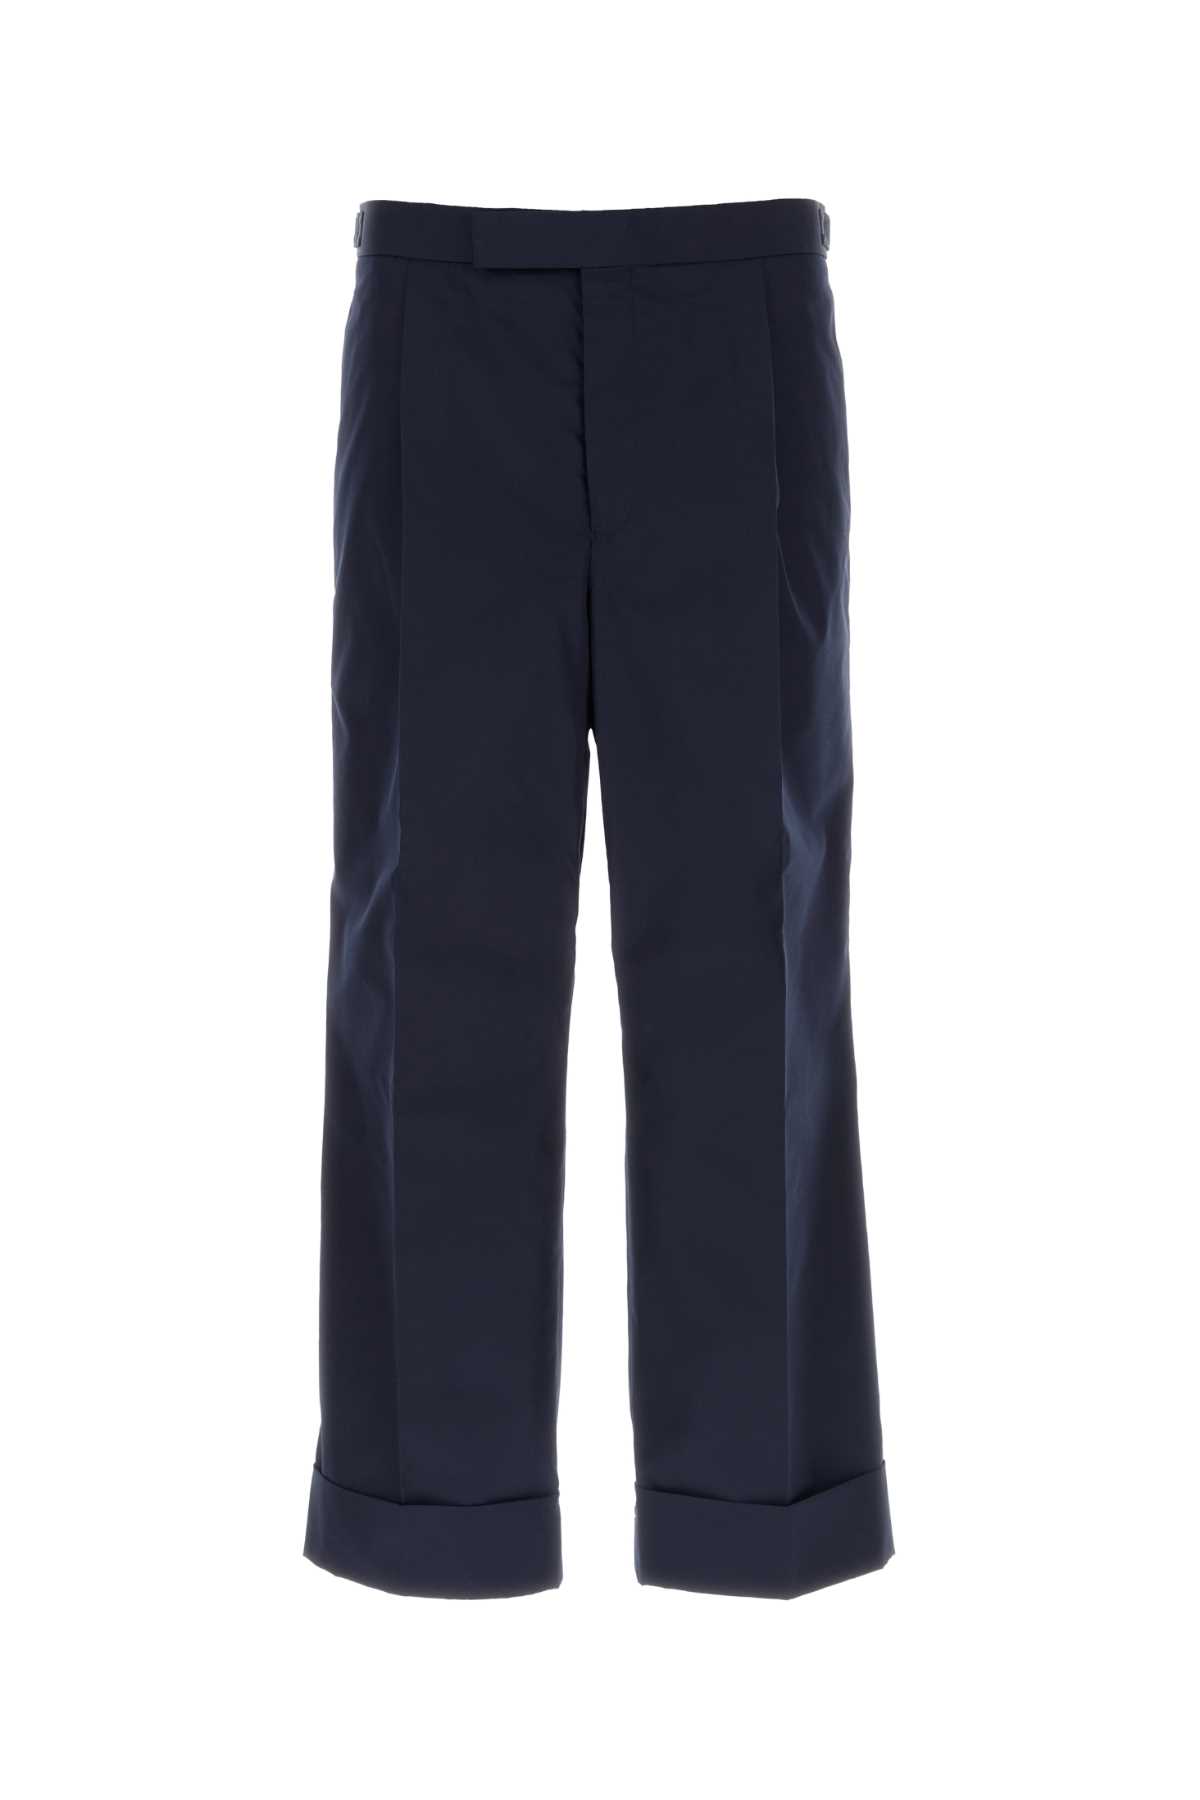 Shop Thom Browne Navy Blue Polyester Blend Pant